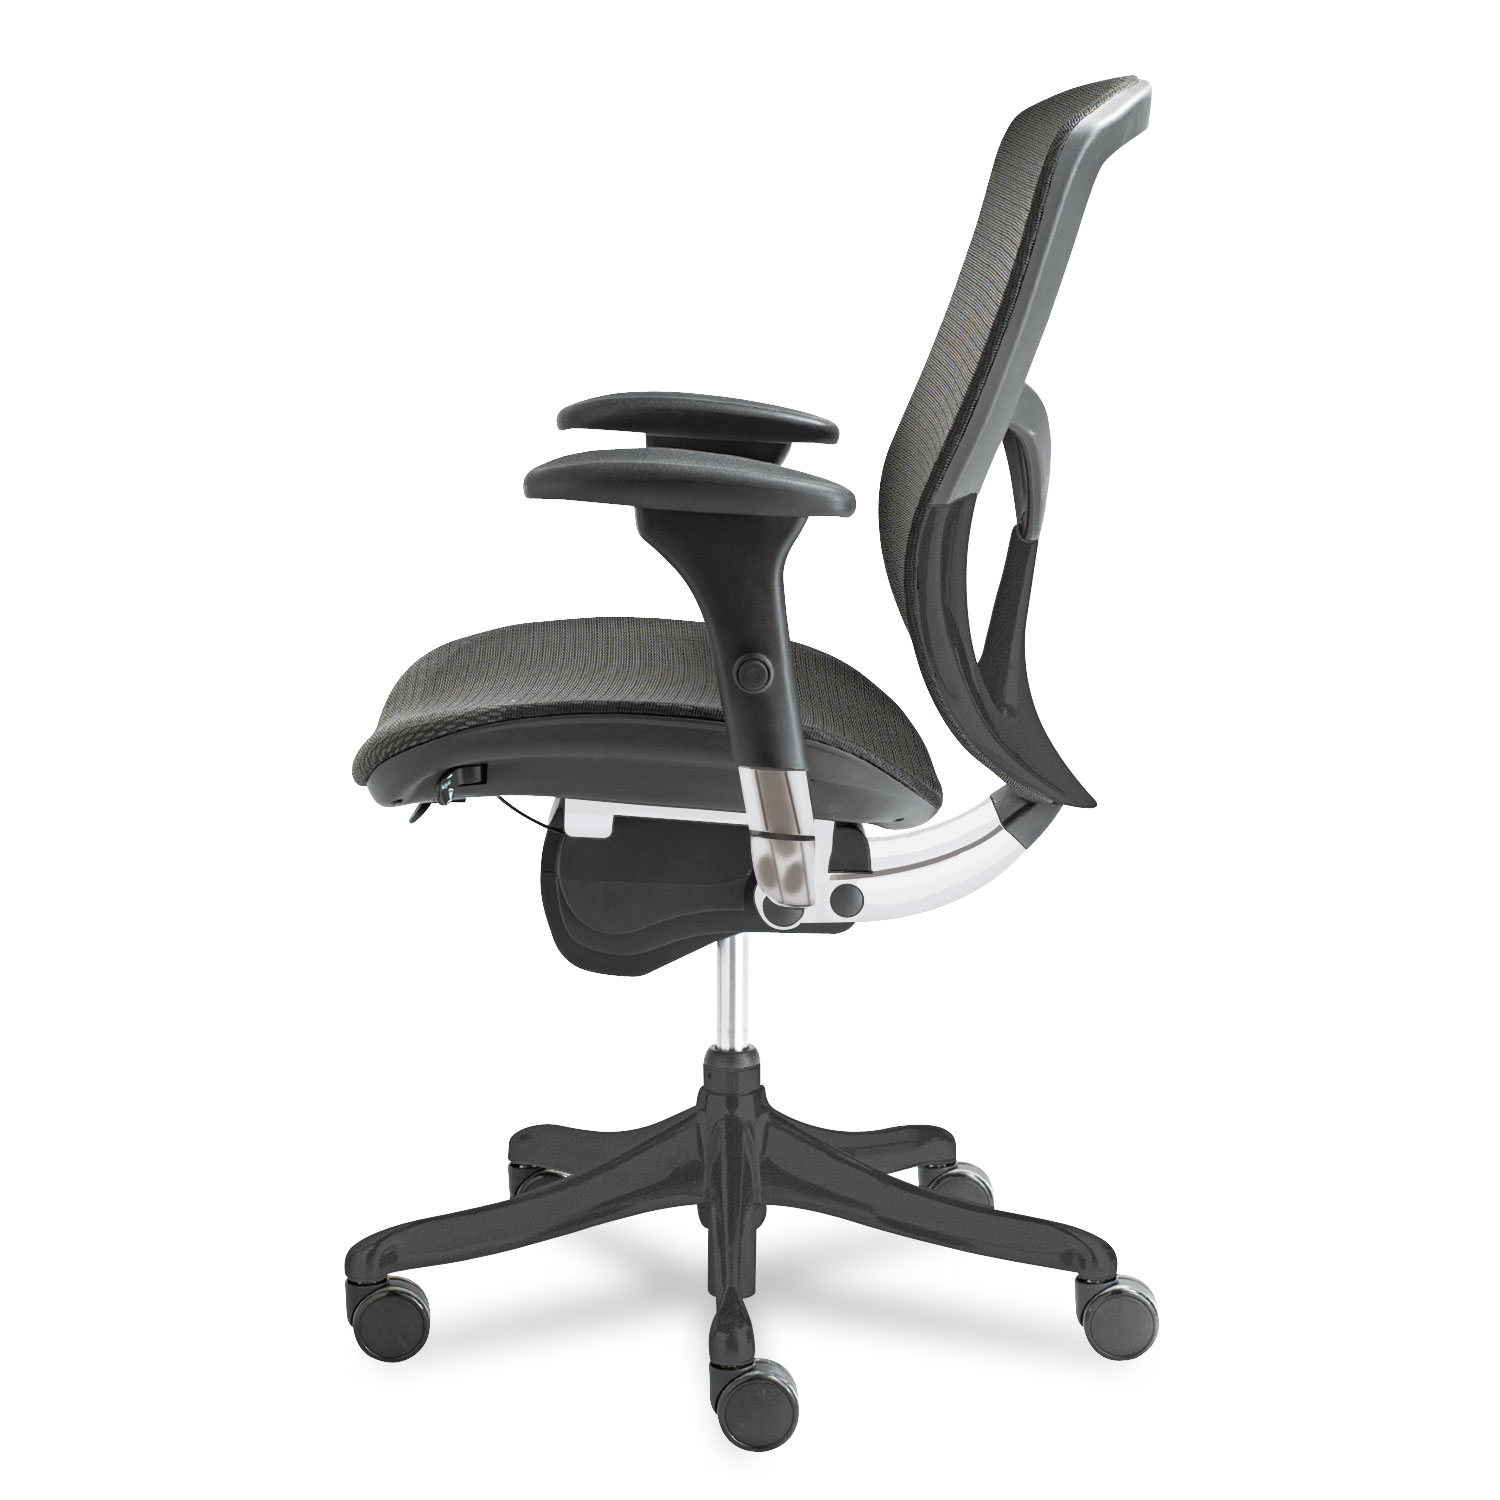 Alera EQ Series Ergonomic Multifunction Mid-Back Mesh Chair, Supports up to 250 lbs., Black Seat/Black Back, Black Base